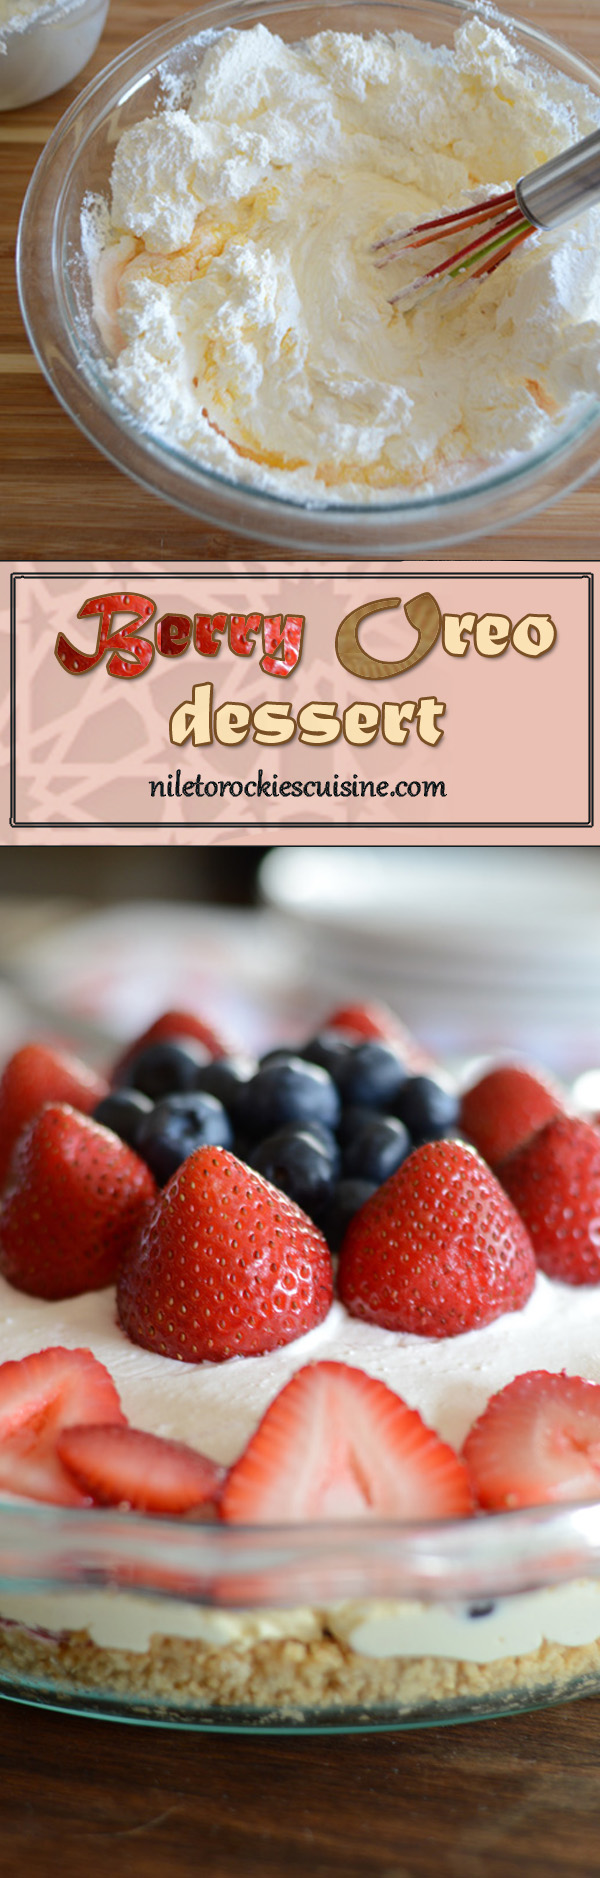 No bake mixed berry oreo dessert | Amira's Pantry